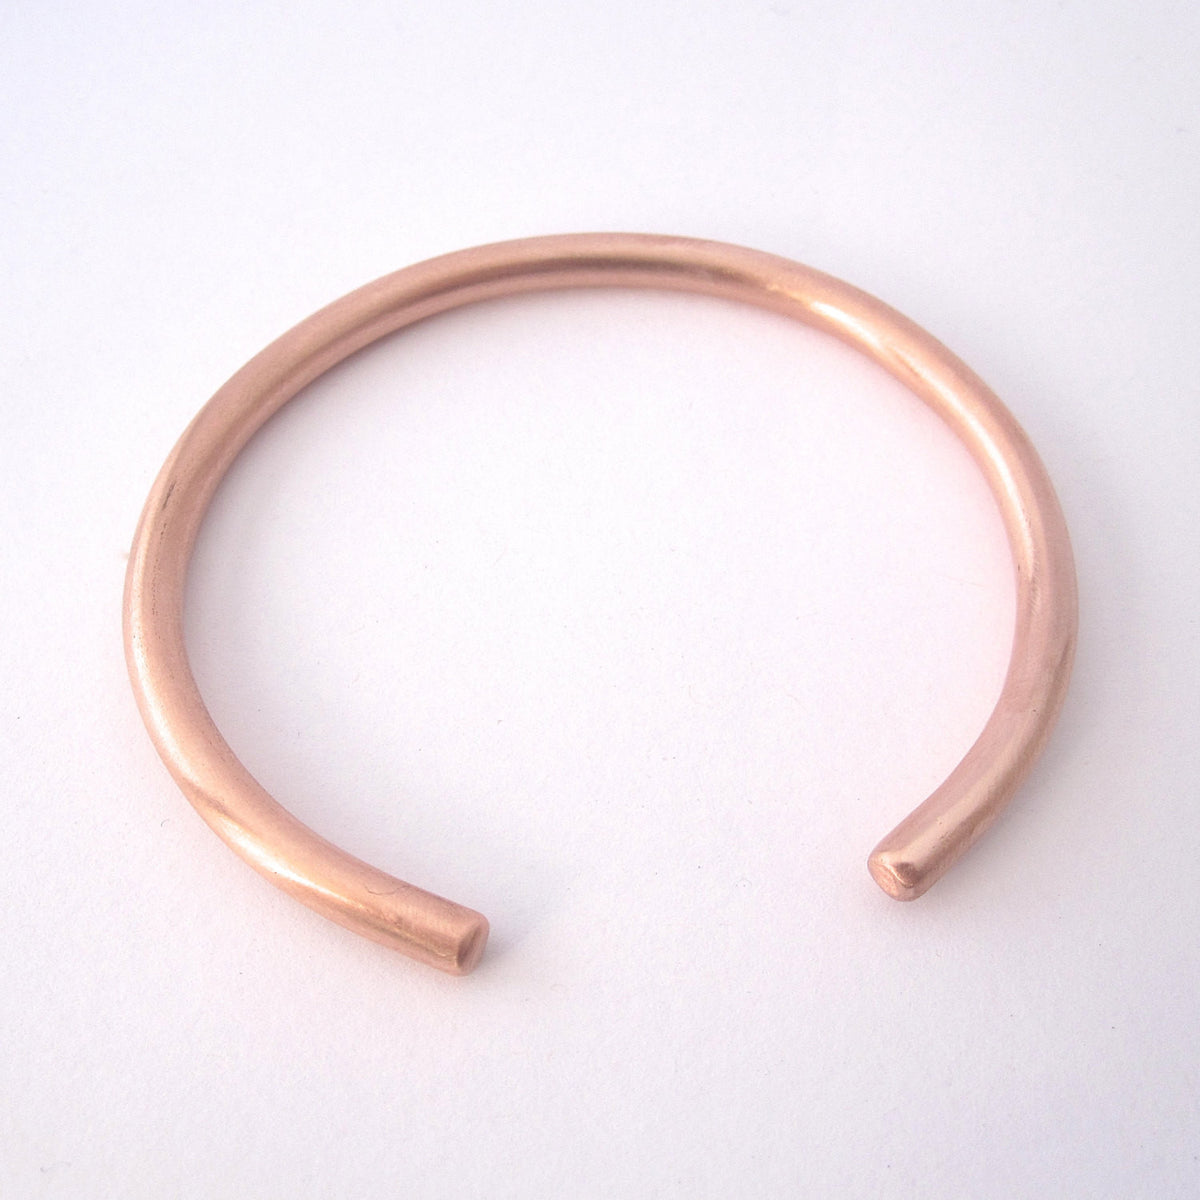 Classic Men's or Unisex Sleek Hand-Made Heavy Round Copper or Brass Bracelet - 0138 - Virginia Wynne Designs